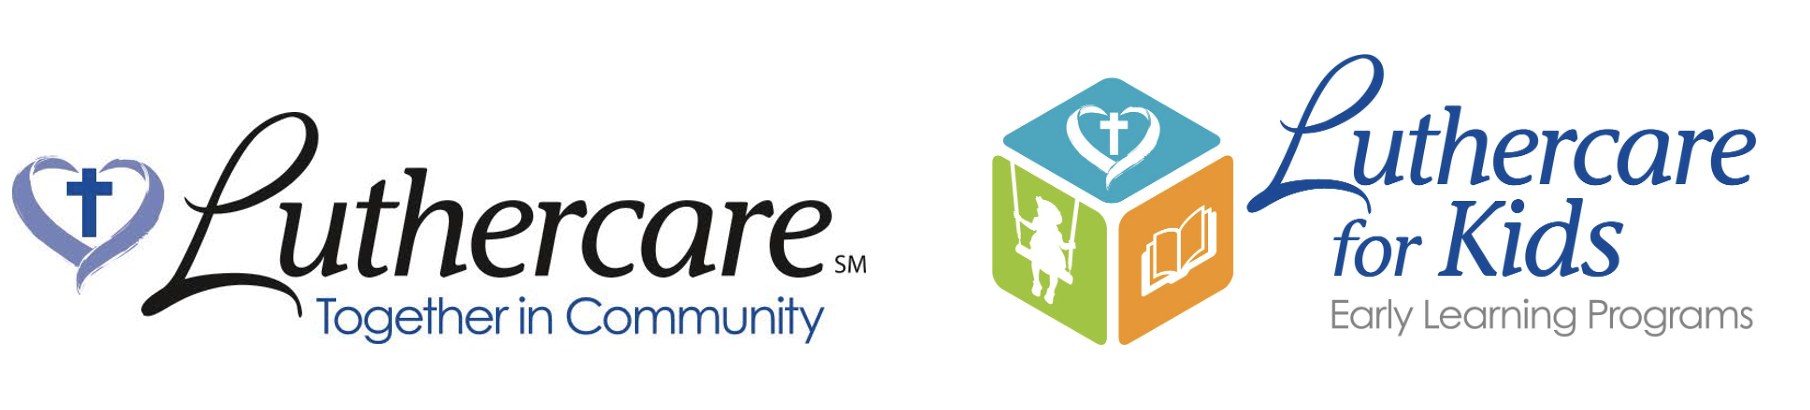 Luthercare LLC Company Logo